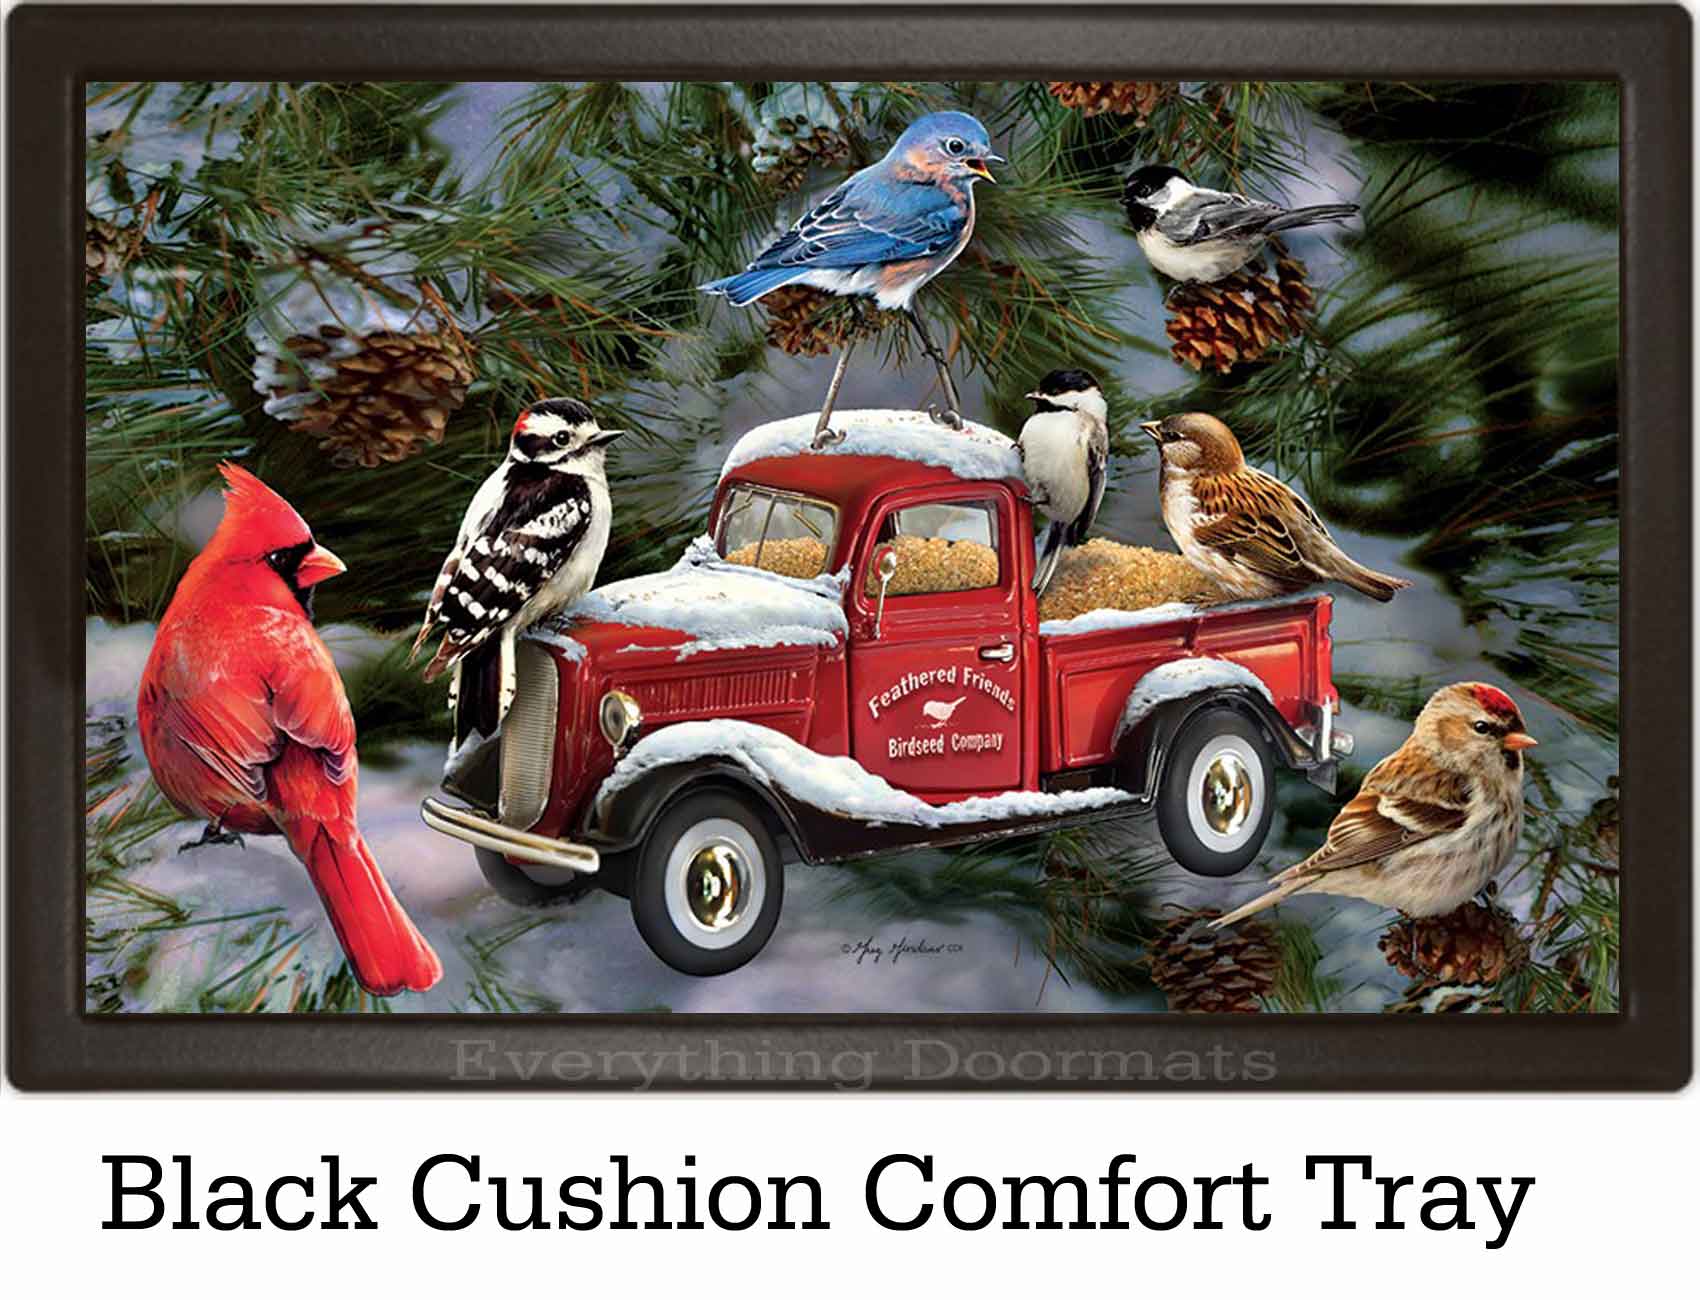 https://www.everythingdoormats.com/images/products/bird-feeder-truck-winter-insert-doormat-in-black-cushion-comfort-tray.jpg